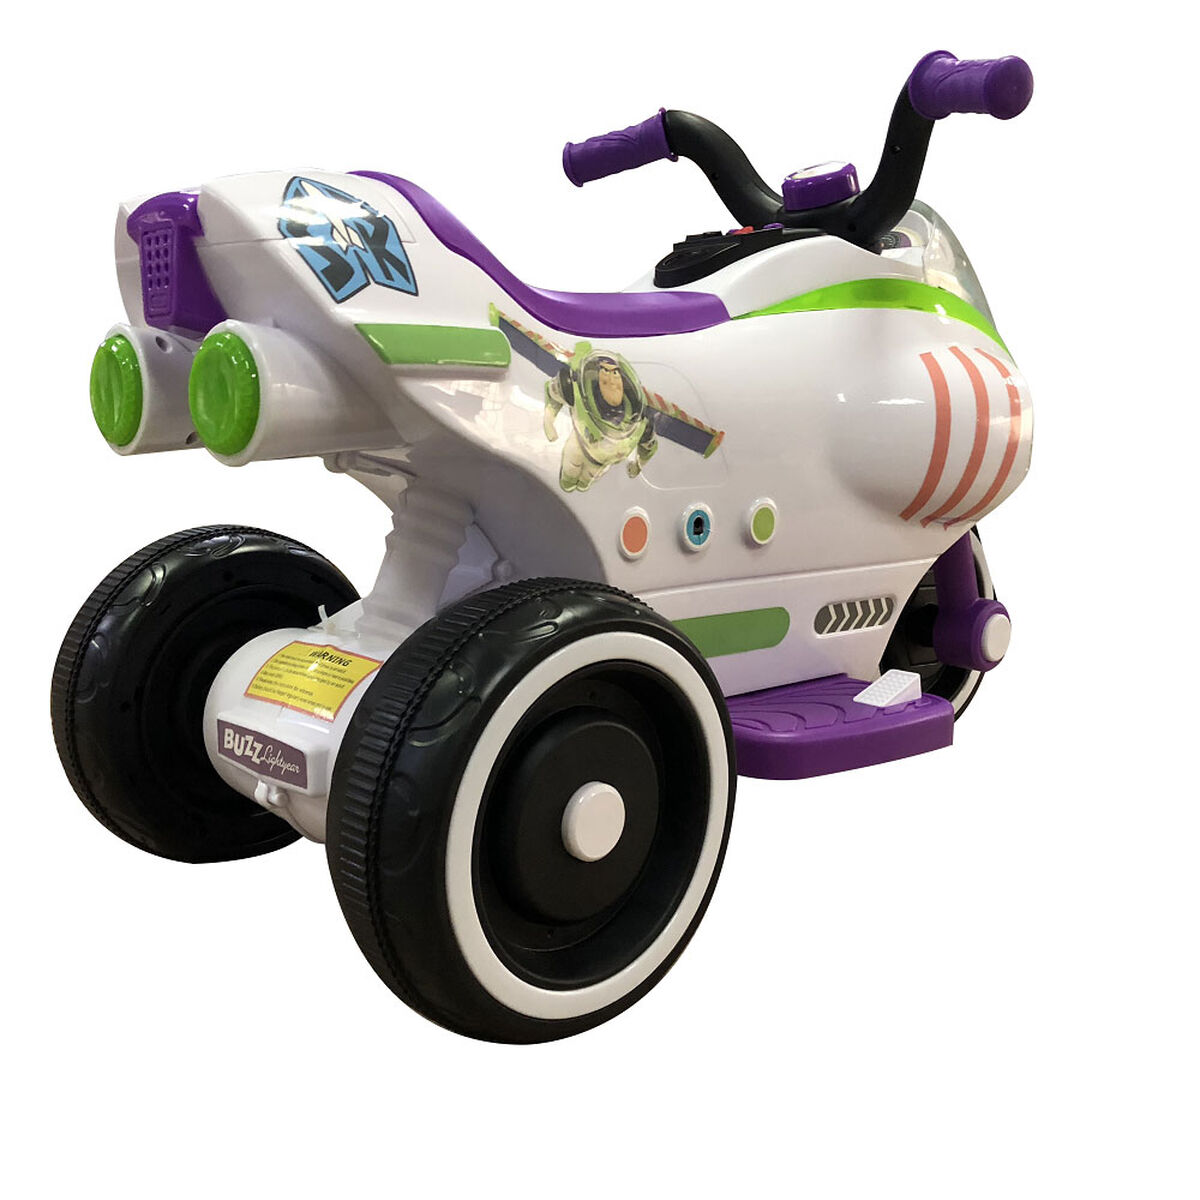 Rodado Moto Toy Story 4 Buzz